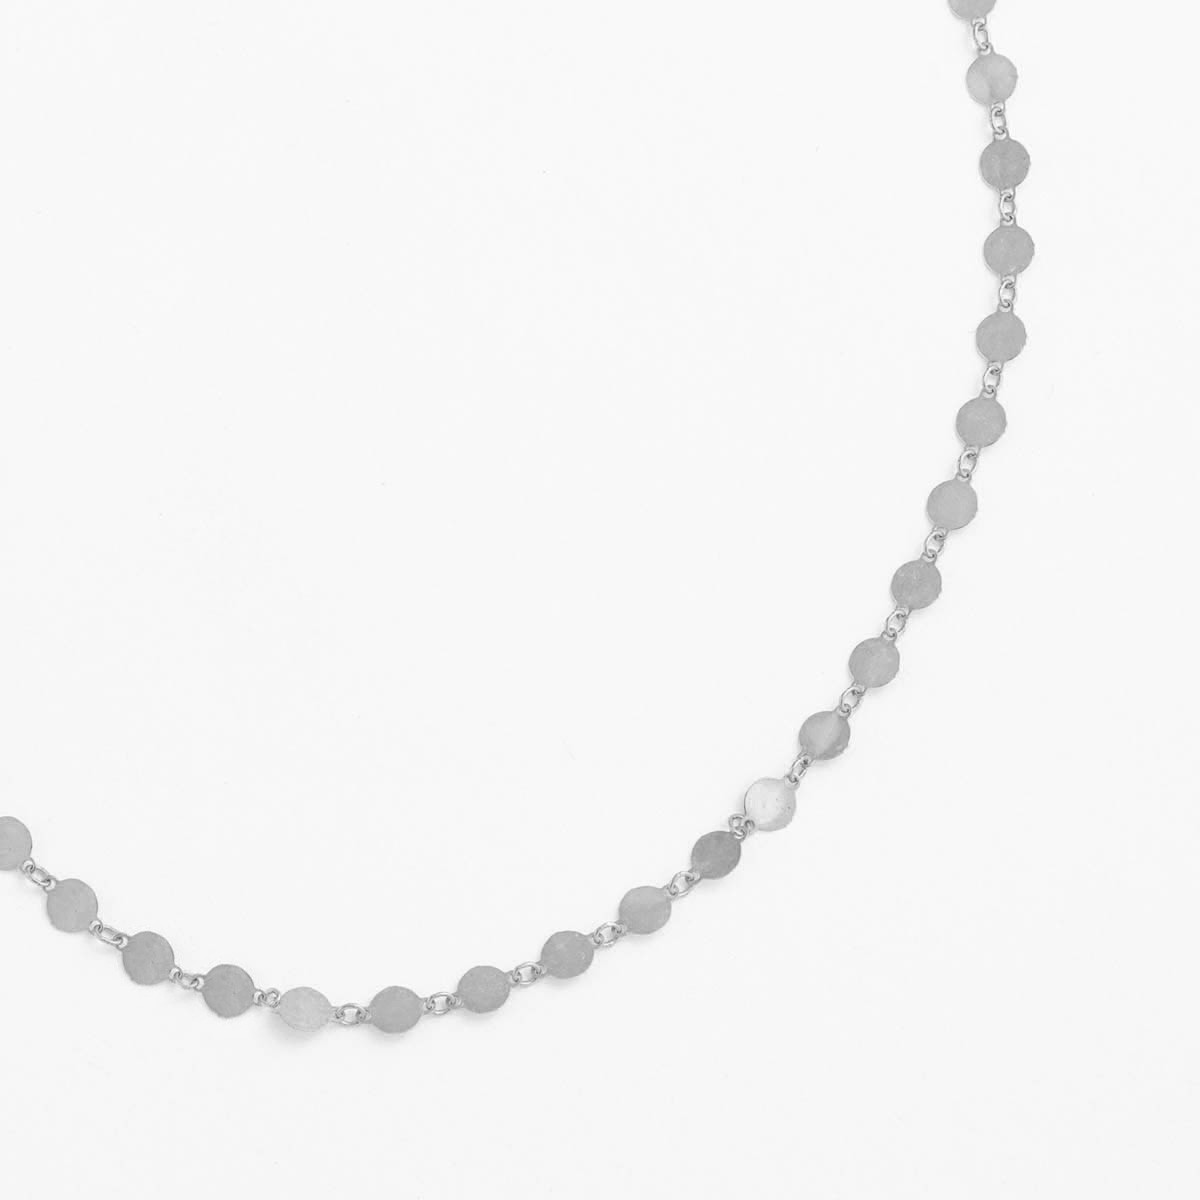 Skye - Halsketten - Silber